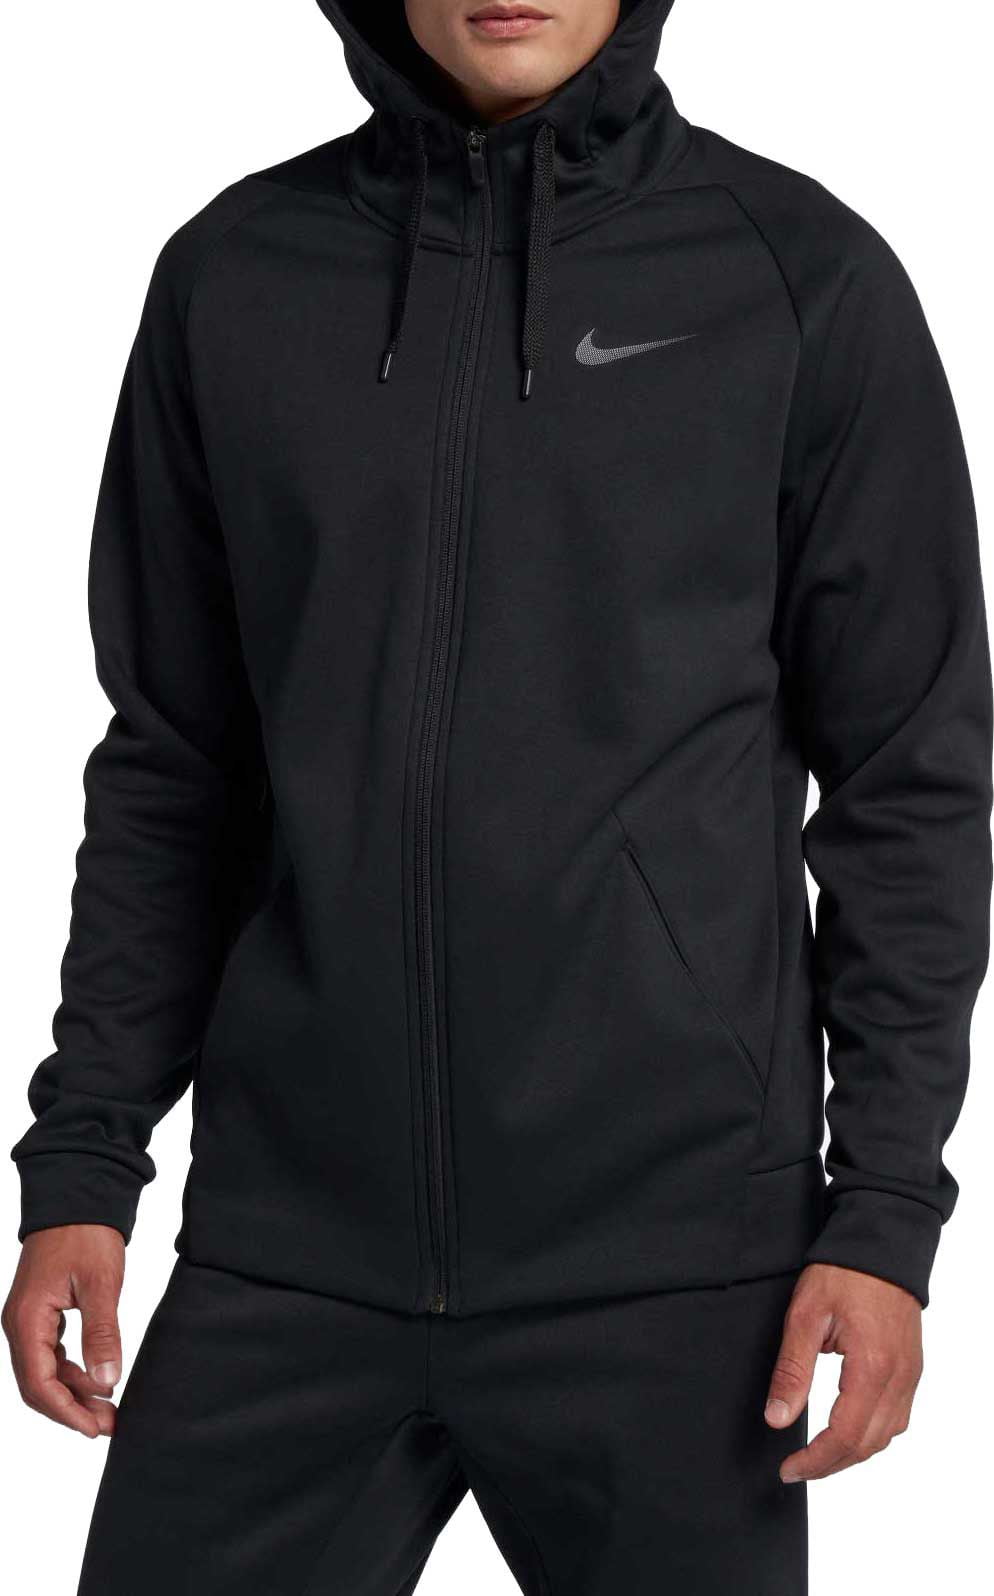 Nike - Nike Men's Therma Full Zip Hooded Jacket - Walmart.com - Walmart.com